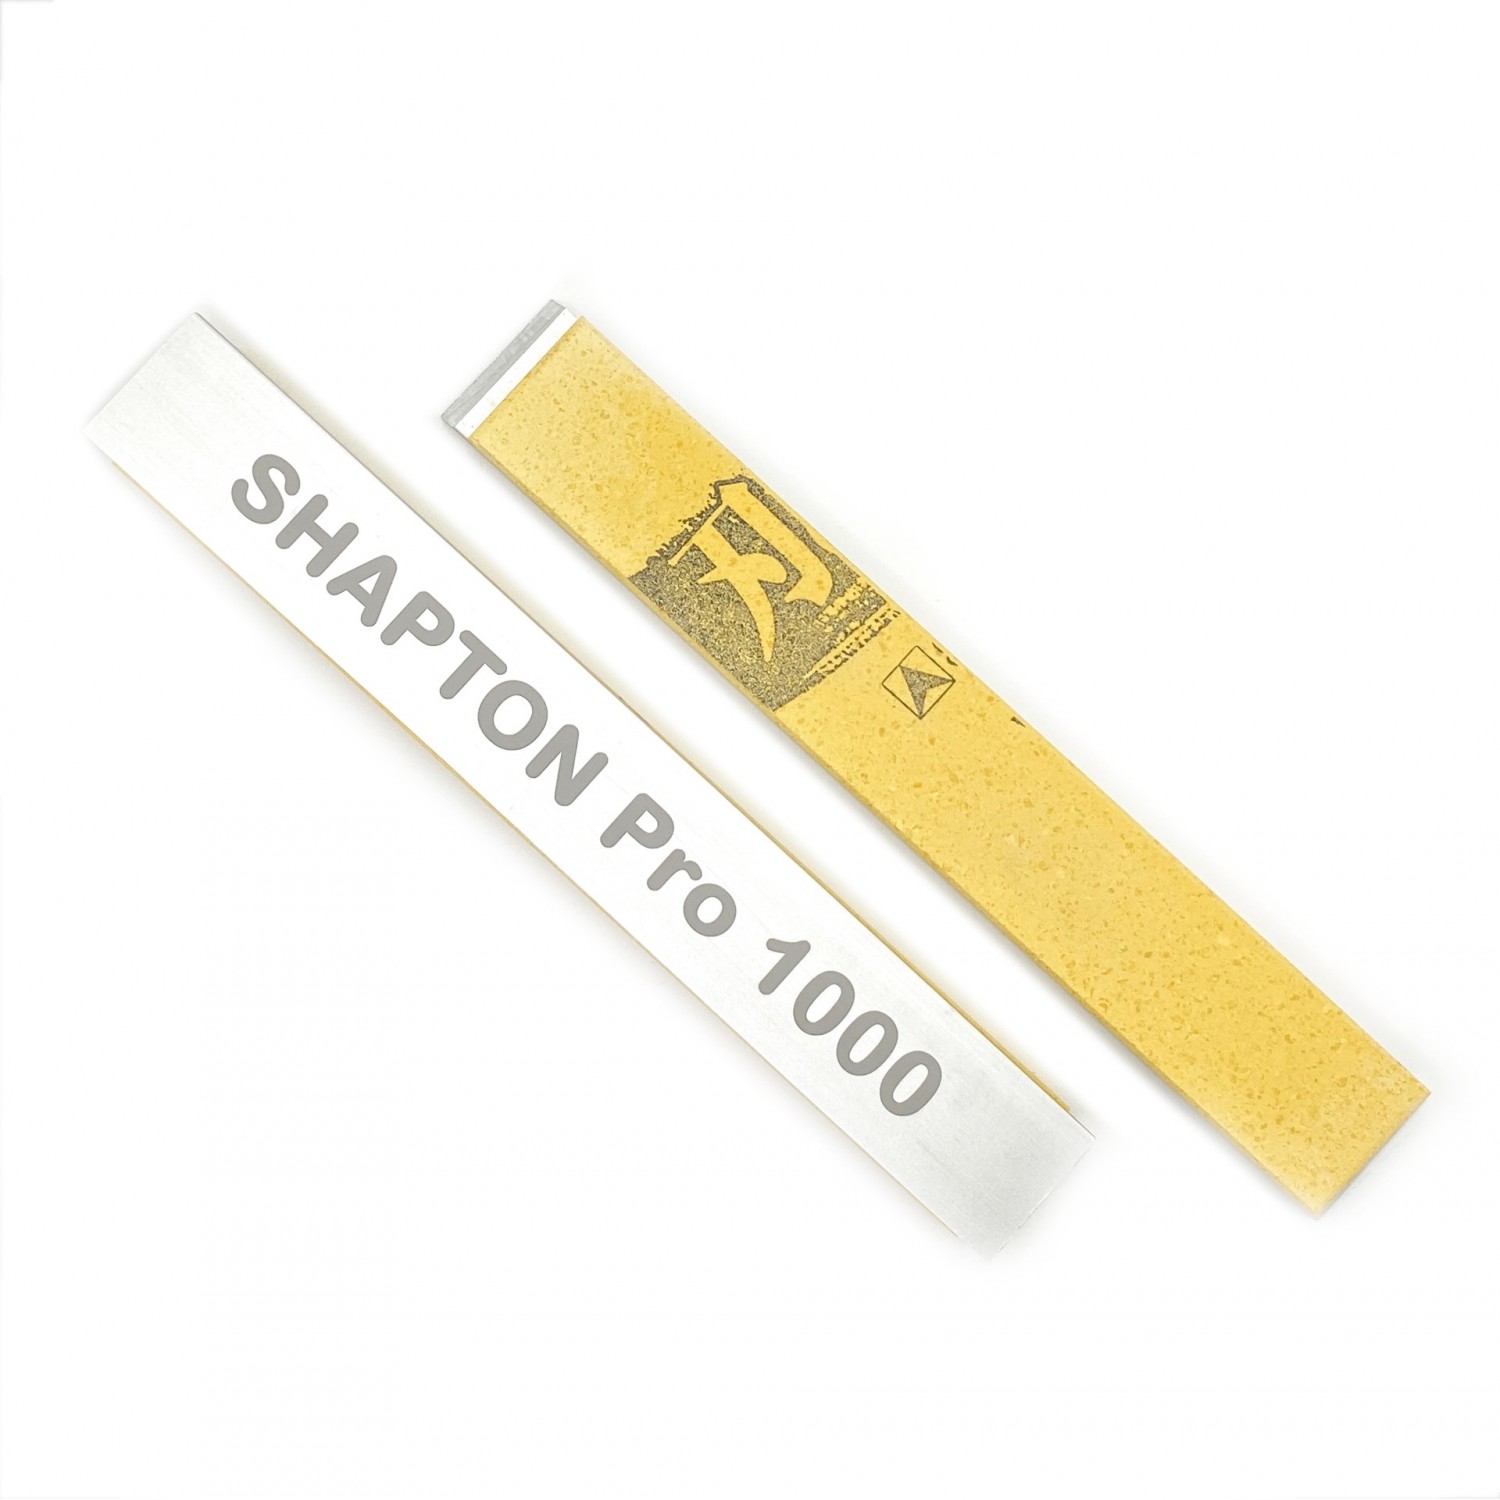 Knife sharpening stones - Shapton Pro (Kuromaku) Buy now!